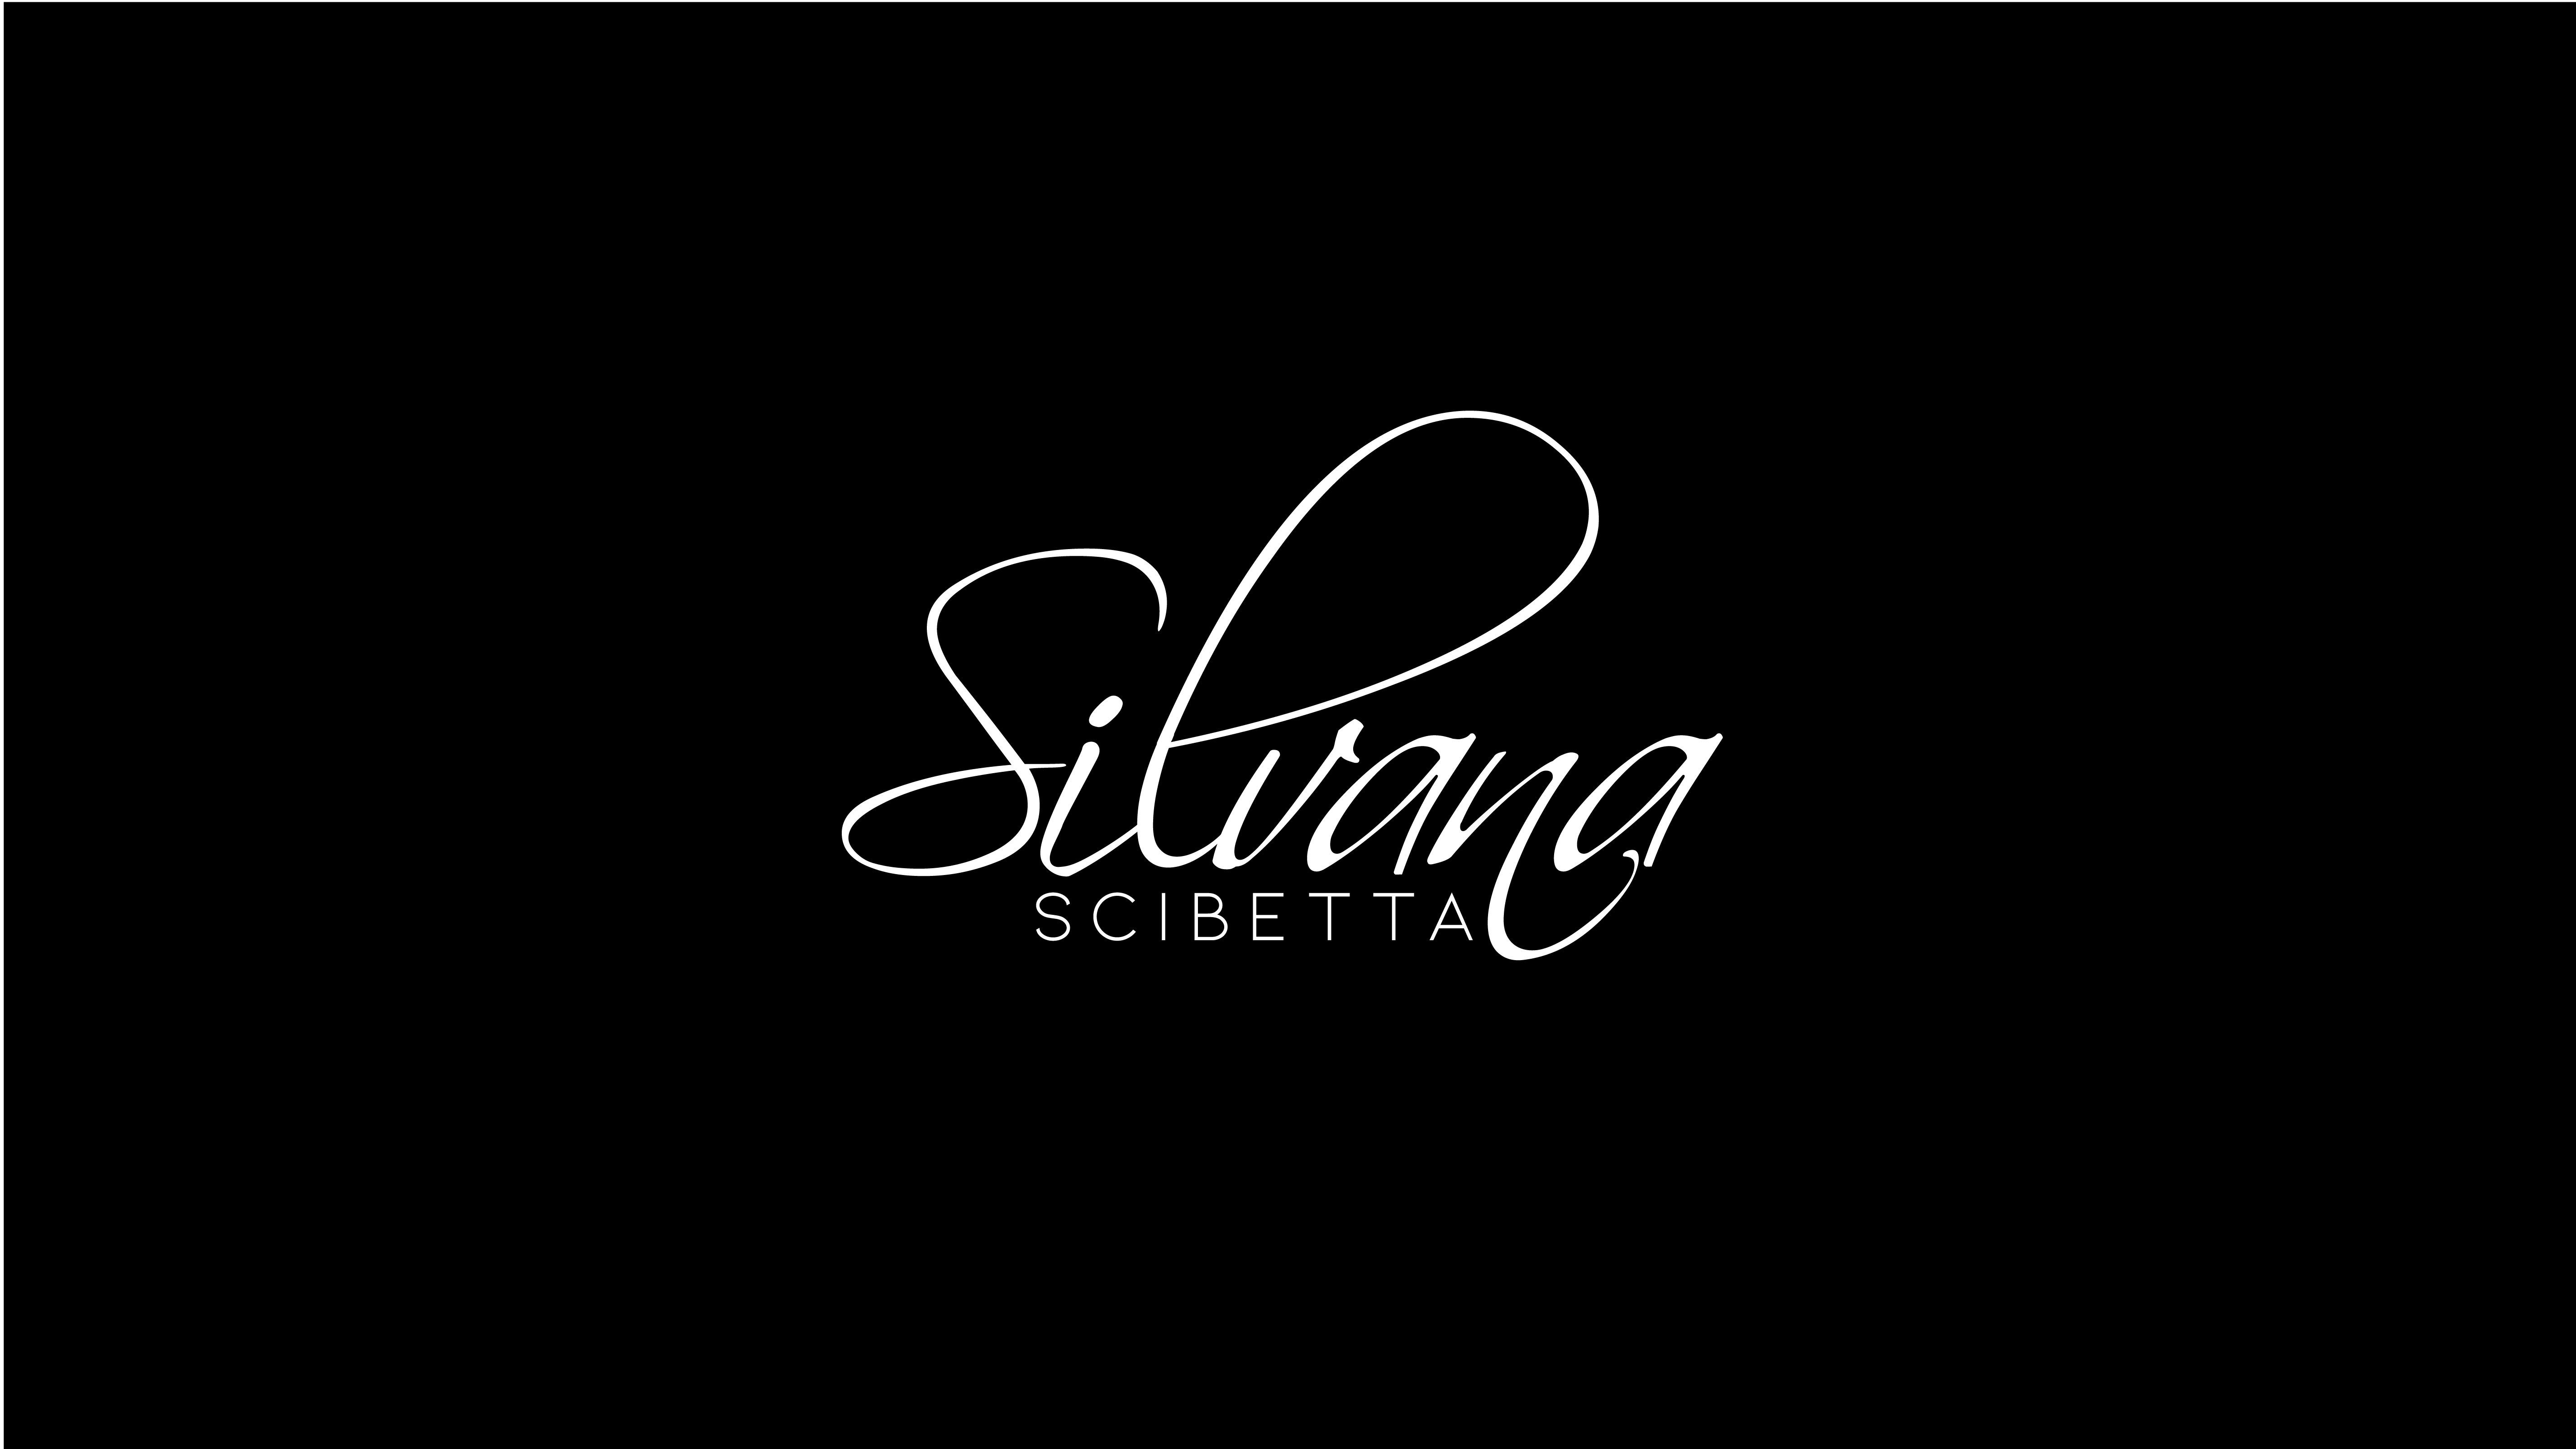 Silvana Scibetta